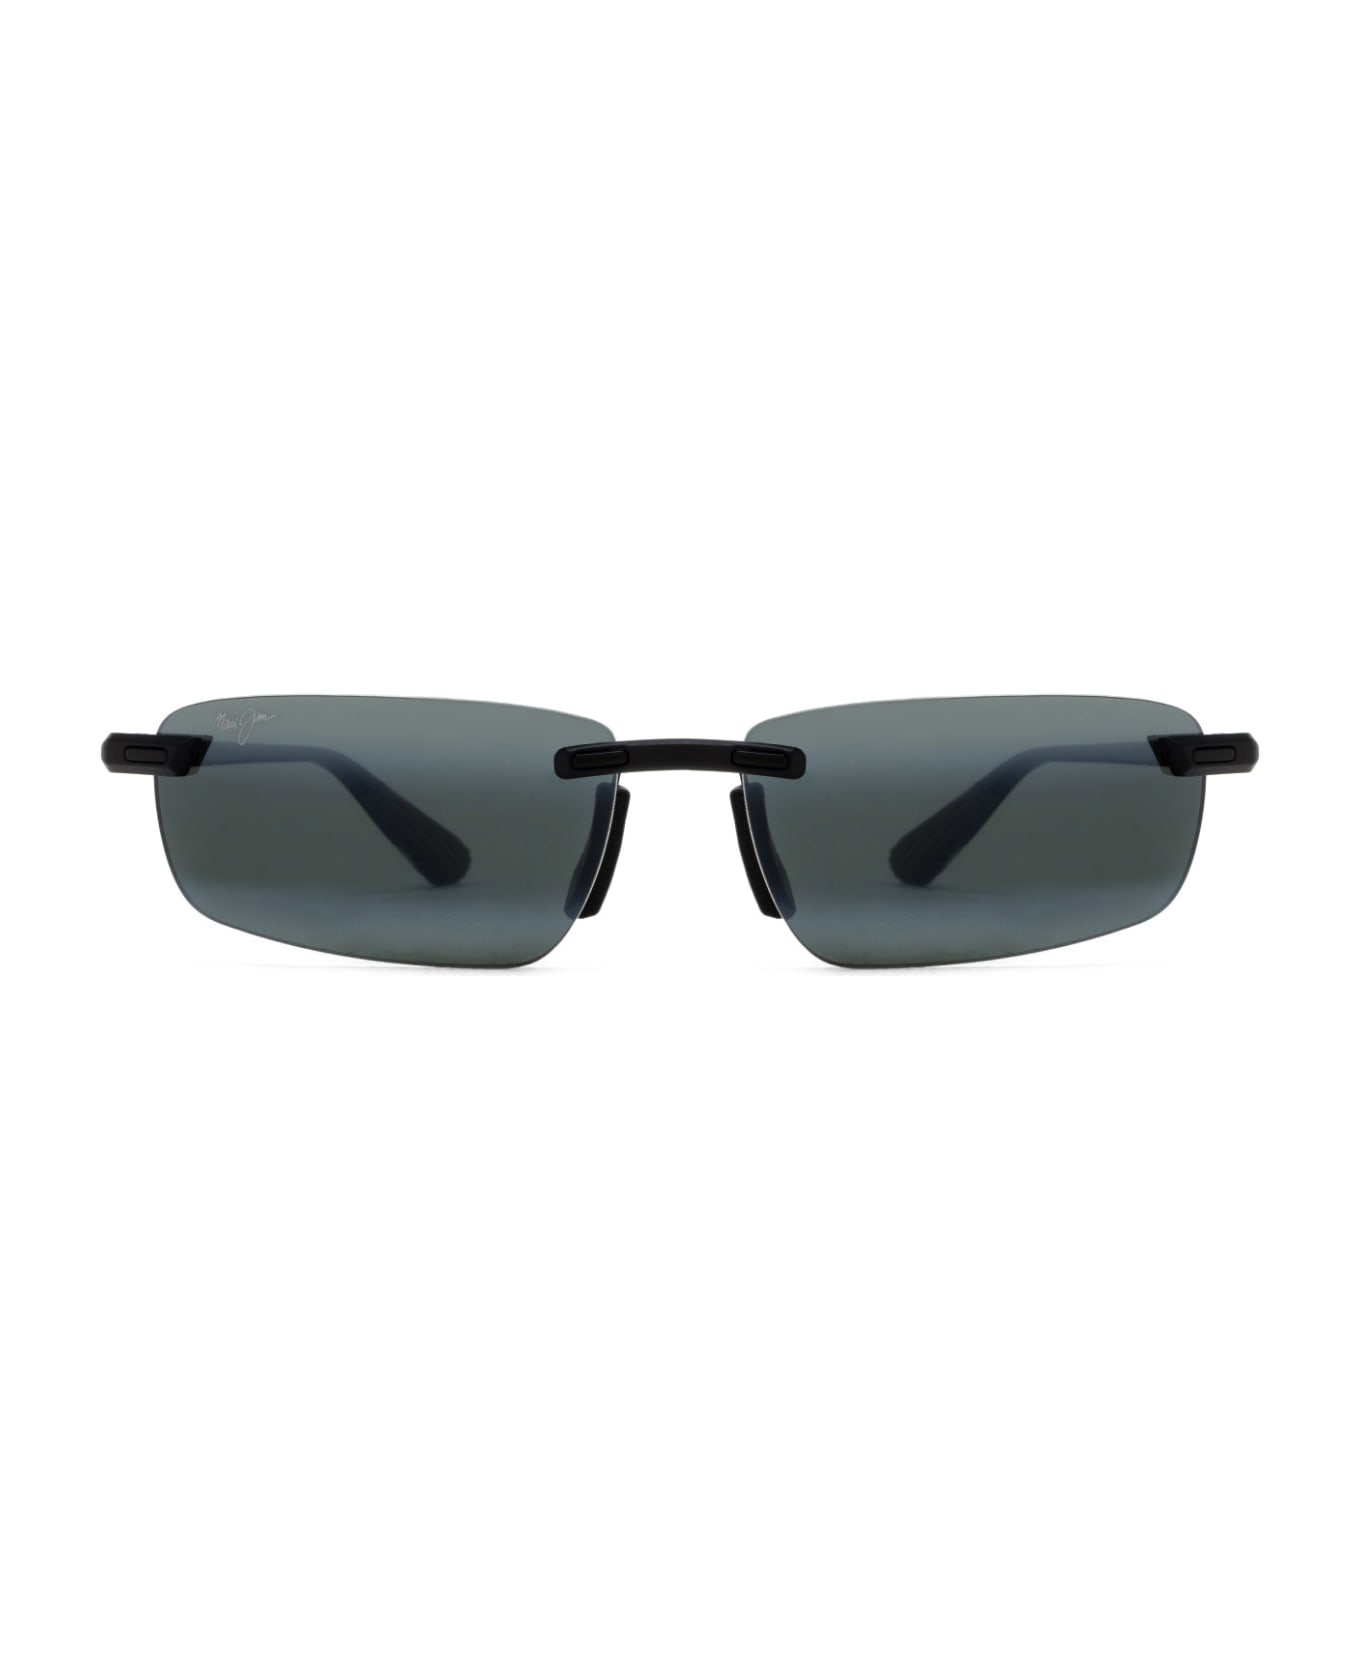 Maui Jim Mj630 Matte Black Sunglasses - Matte Black サングラス